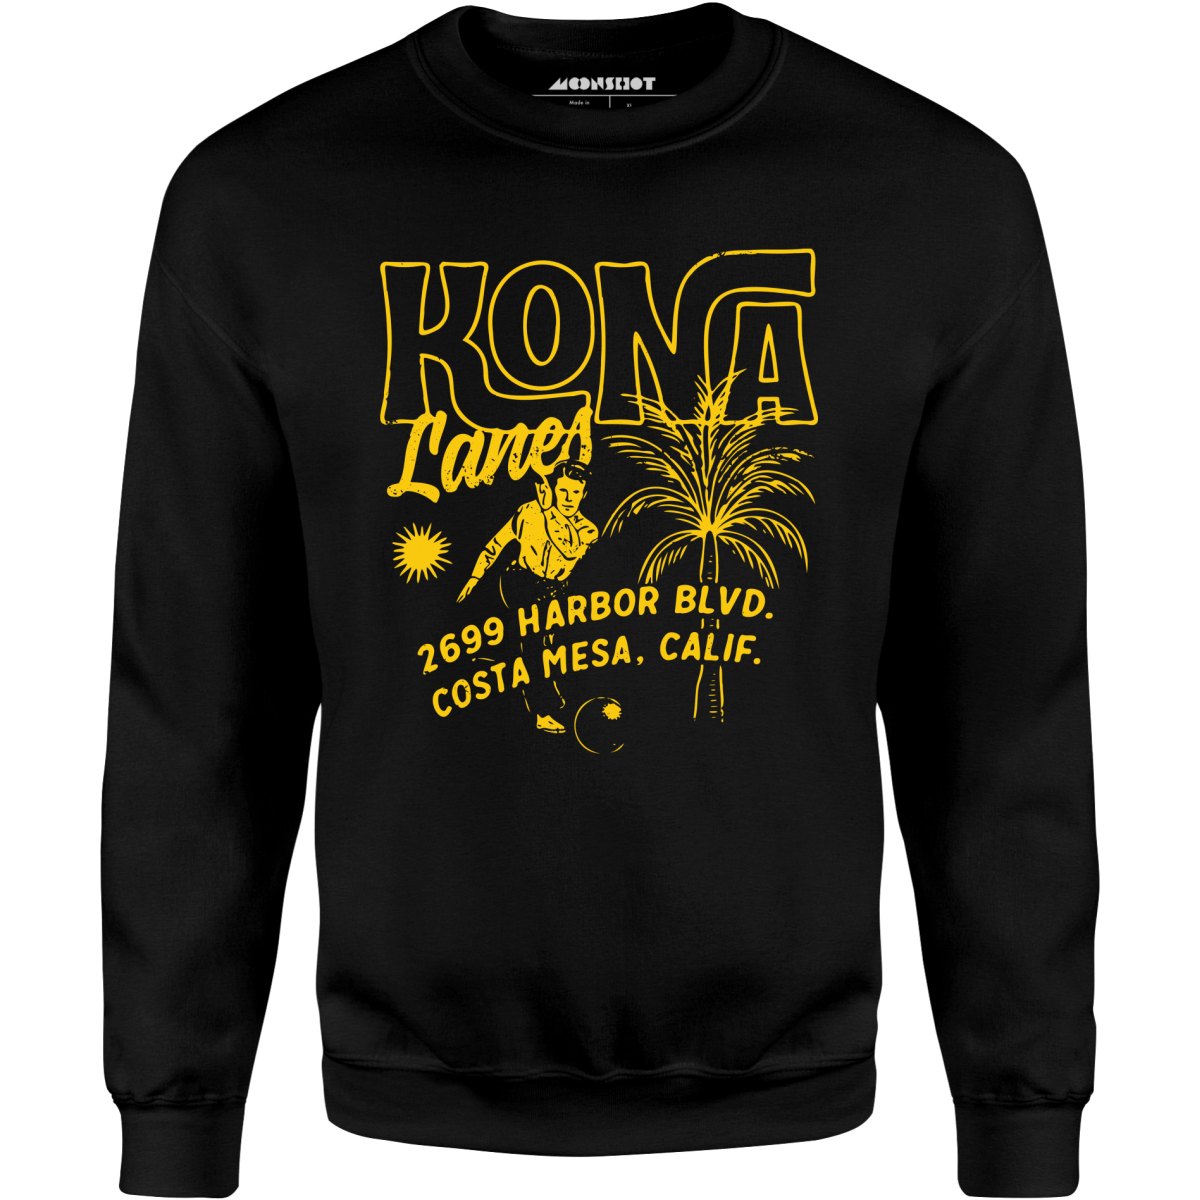 Kona Lanes v3 - Costa Mesa, CA - Vintage Bowling Alley - Unisex Sweatshirt